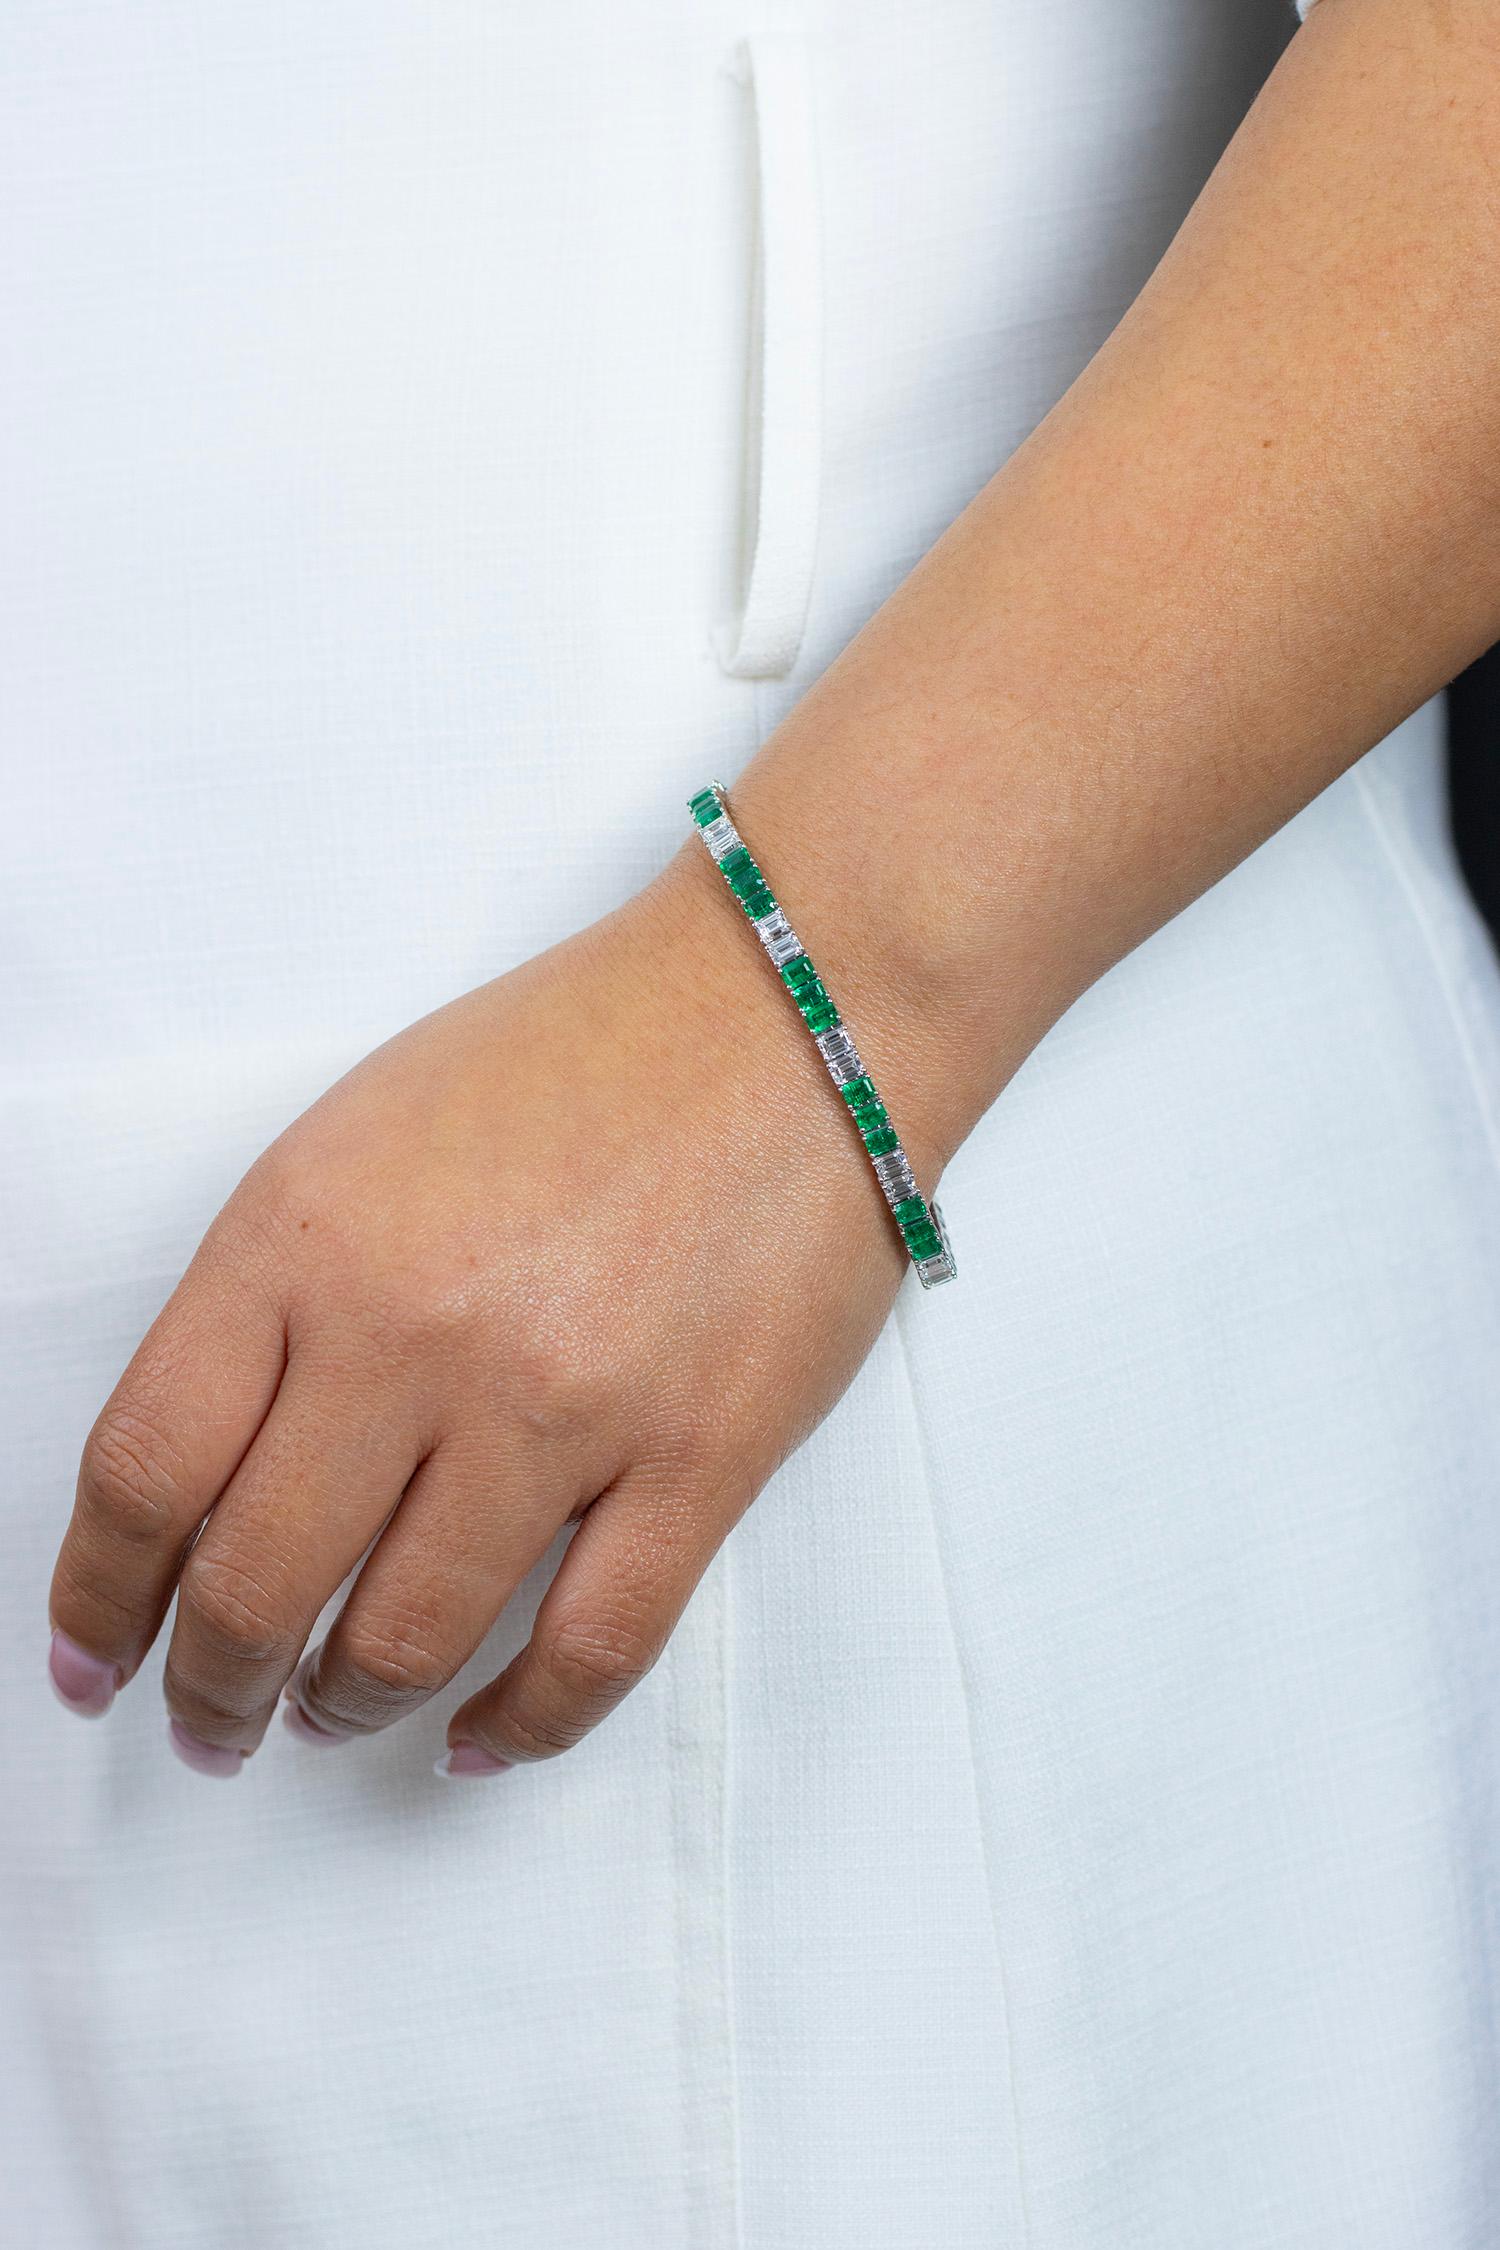 Roman Malakov 11.36 Carats Total Emerald Cut Emerald & Diamond Tennis Bracelet For Sale 1